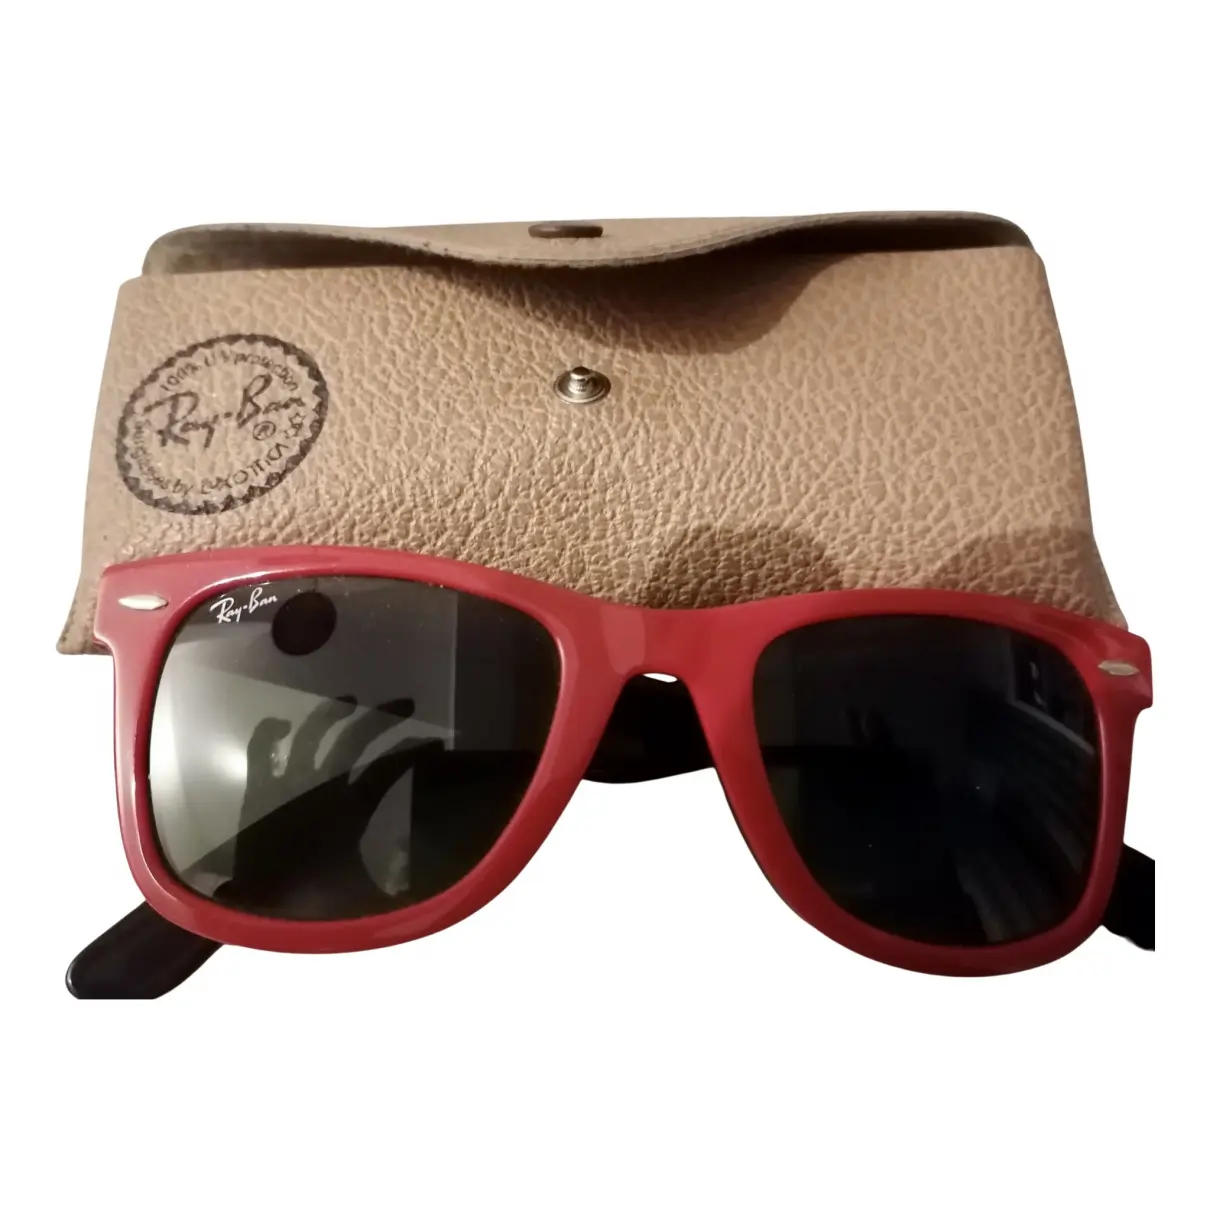 Original Wayfarer sunglasses Ray-Ban